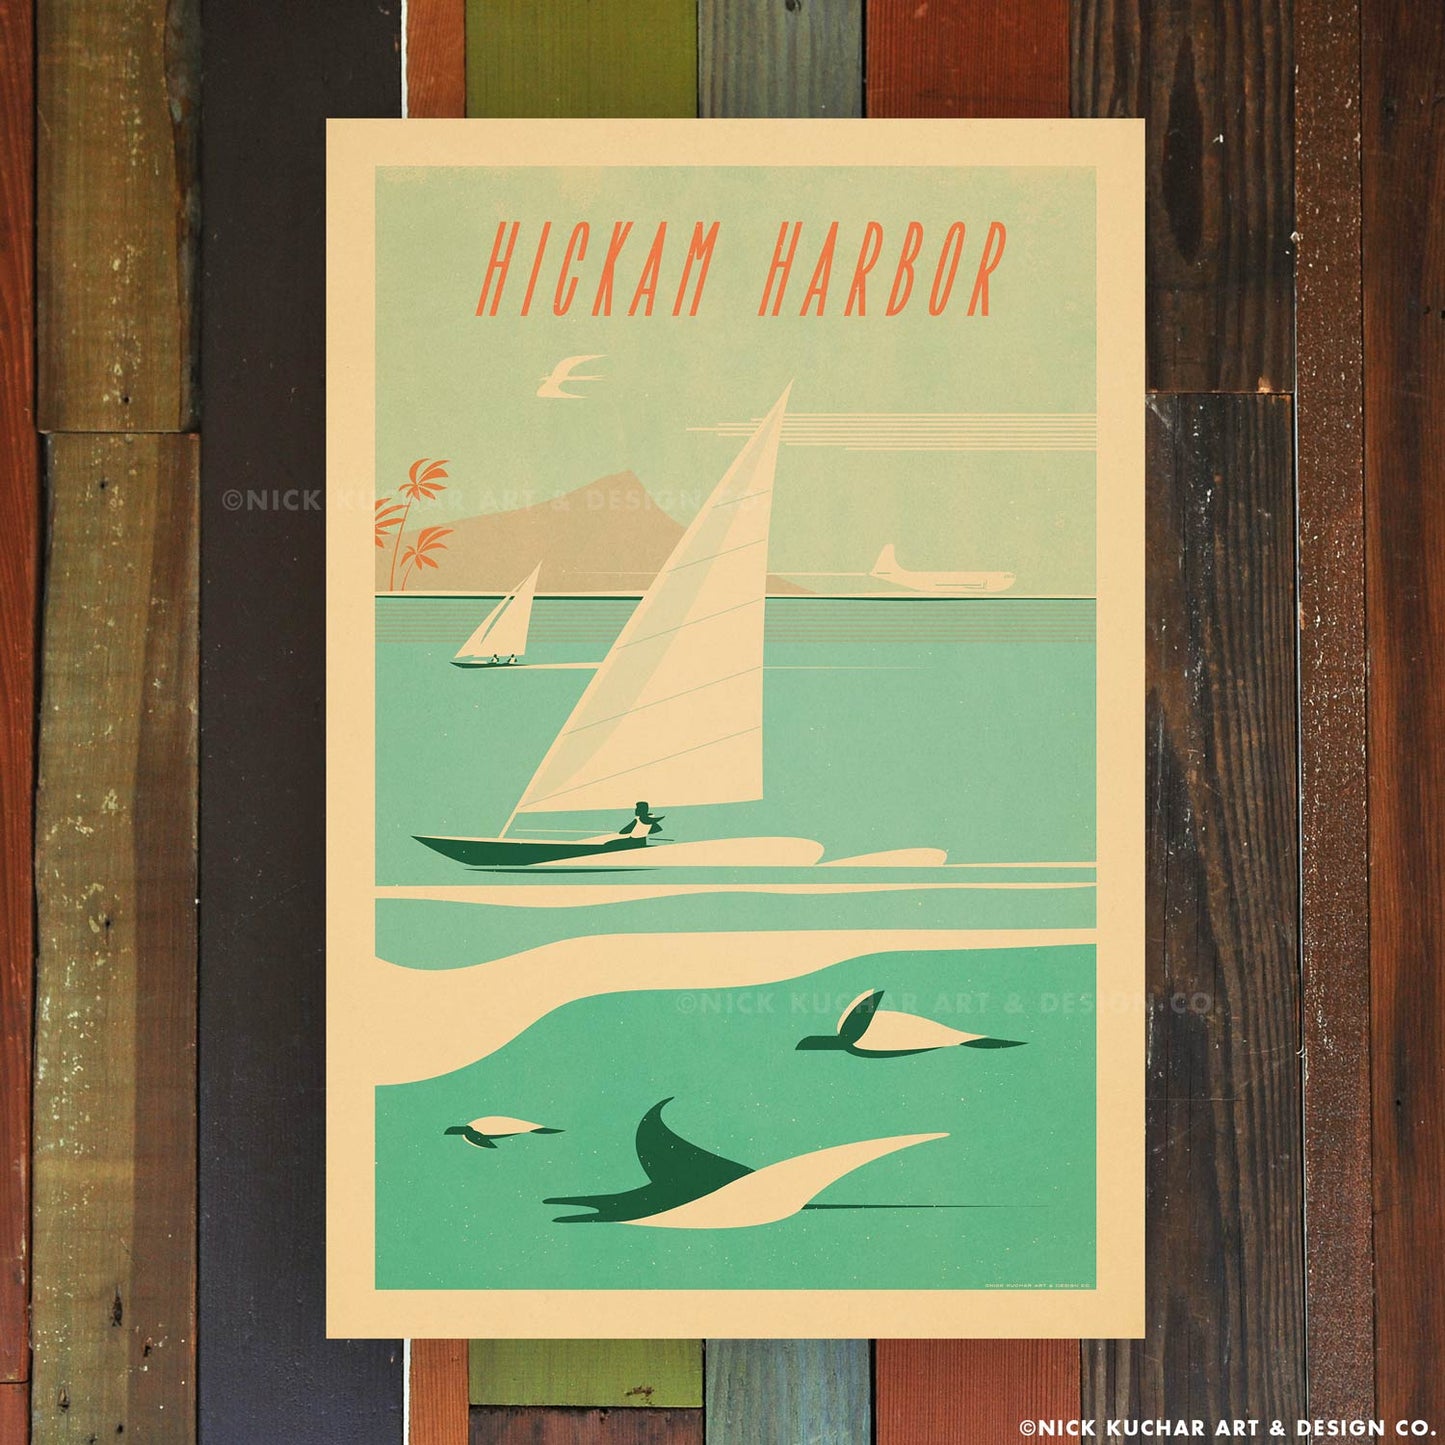 Hickam Harbor Travel Print by Nick Kuchar - NEW!